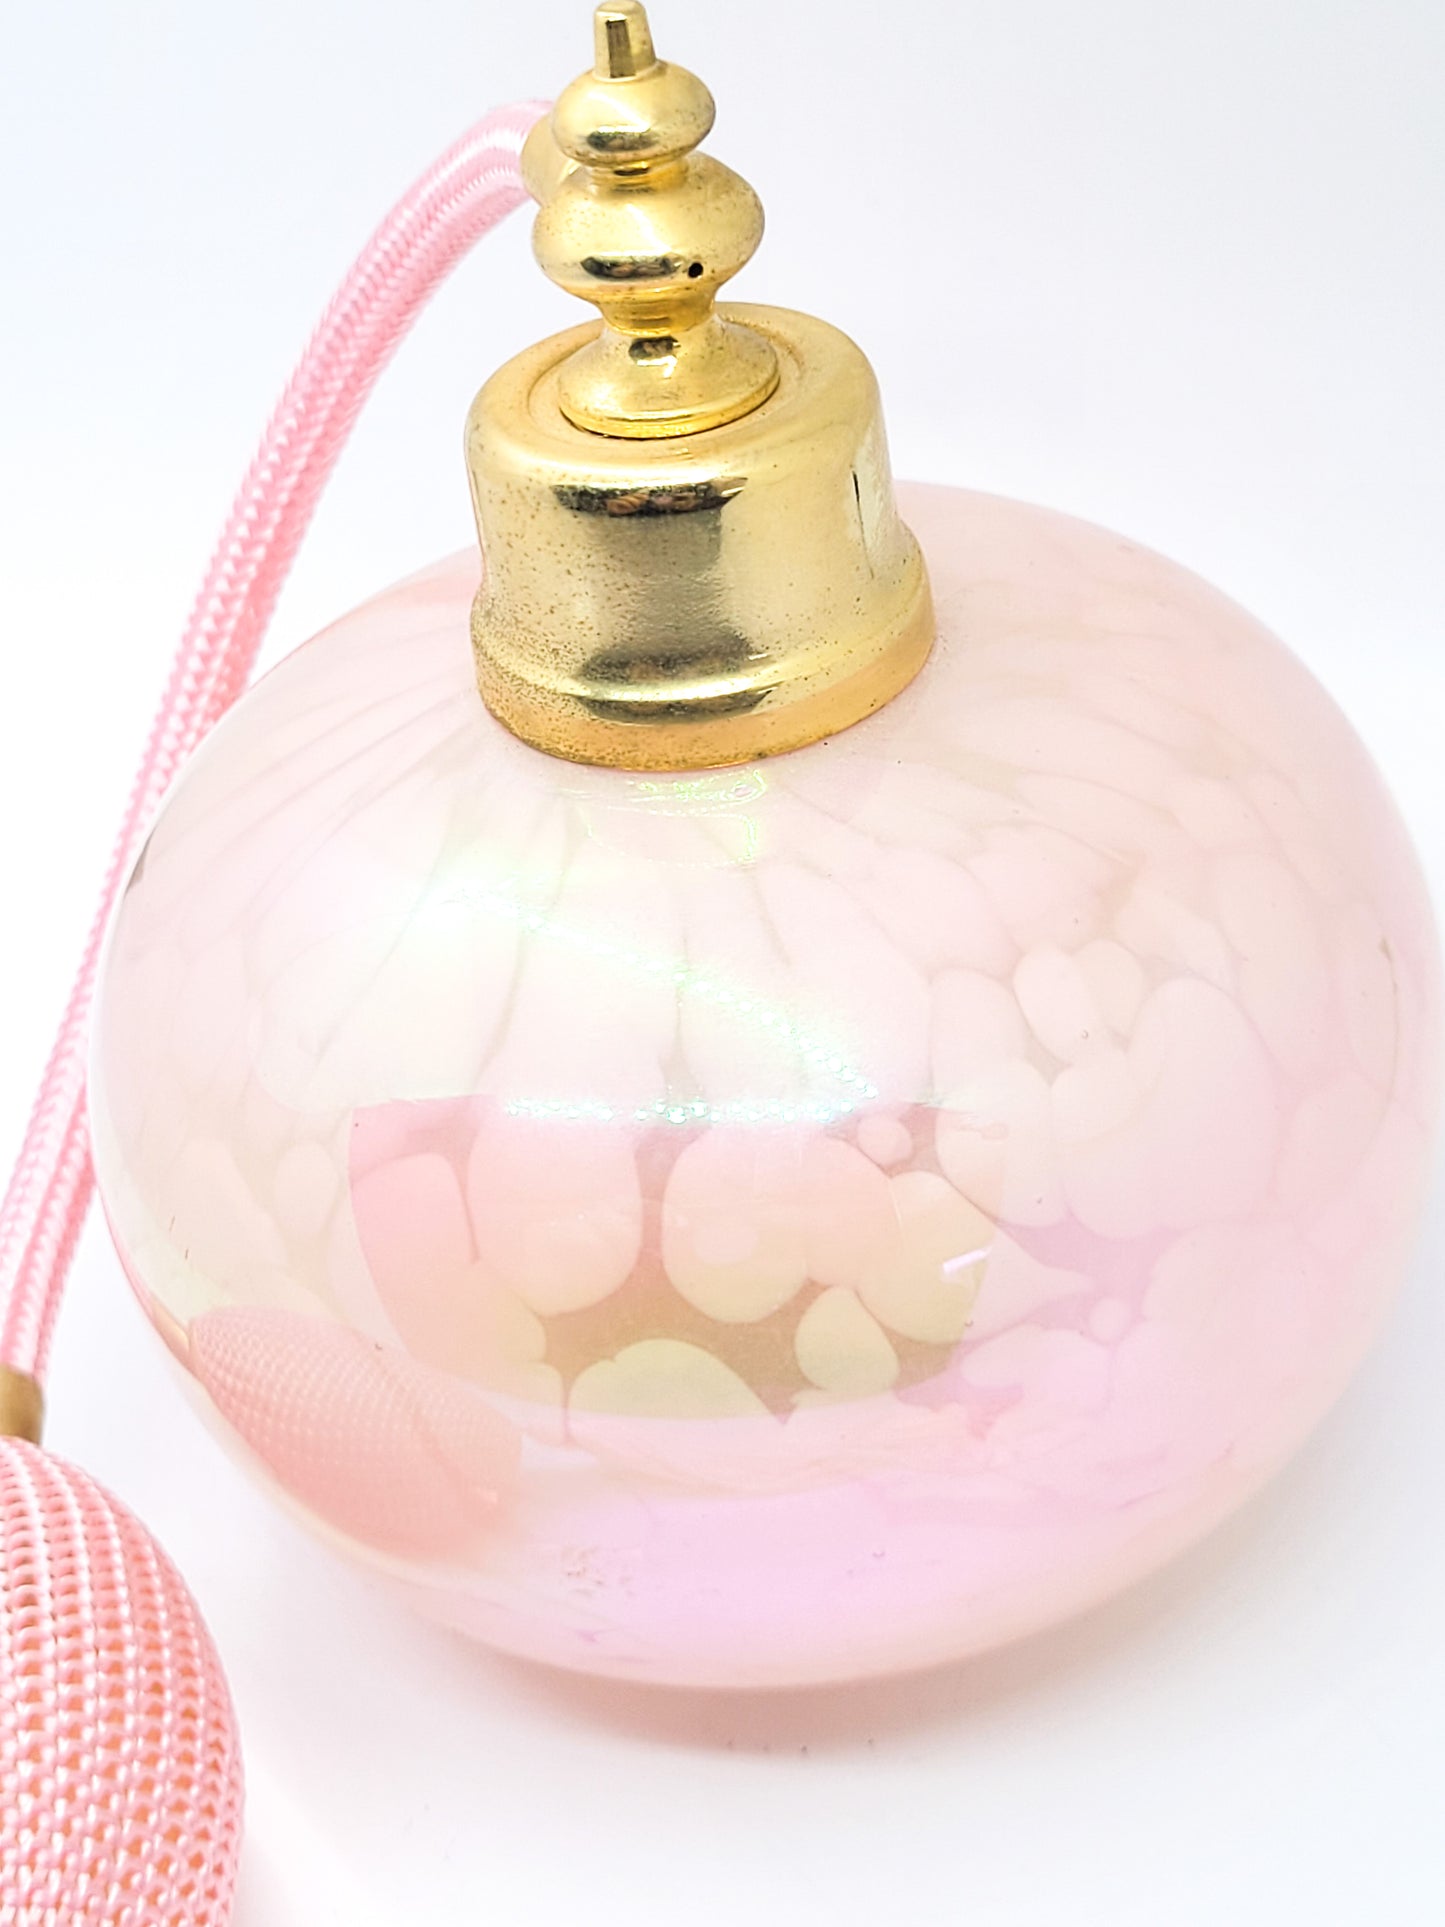 Irice vintage Pink iridescent blown glass vintage perfume bottle with atomizer